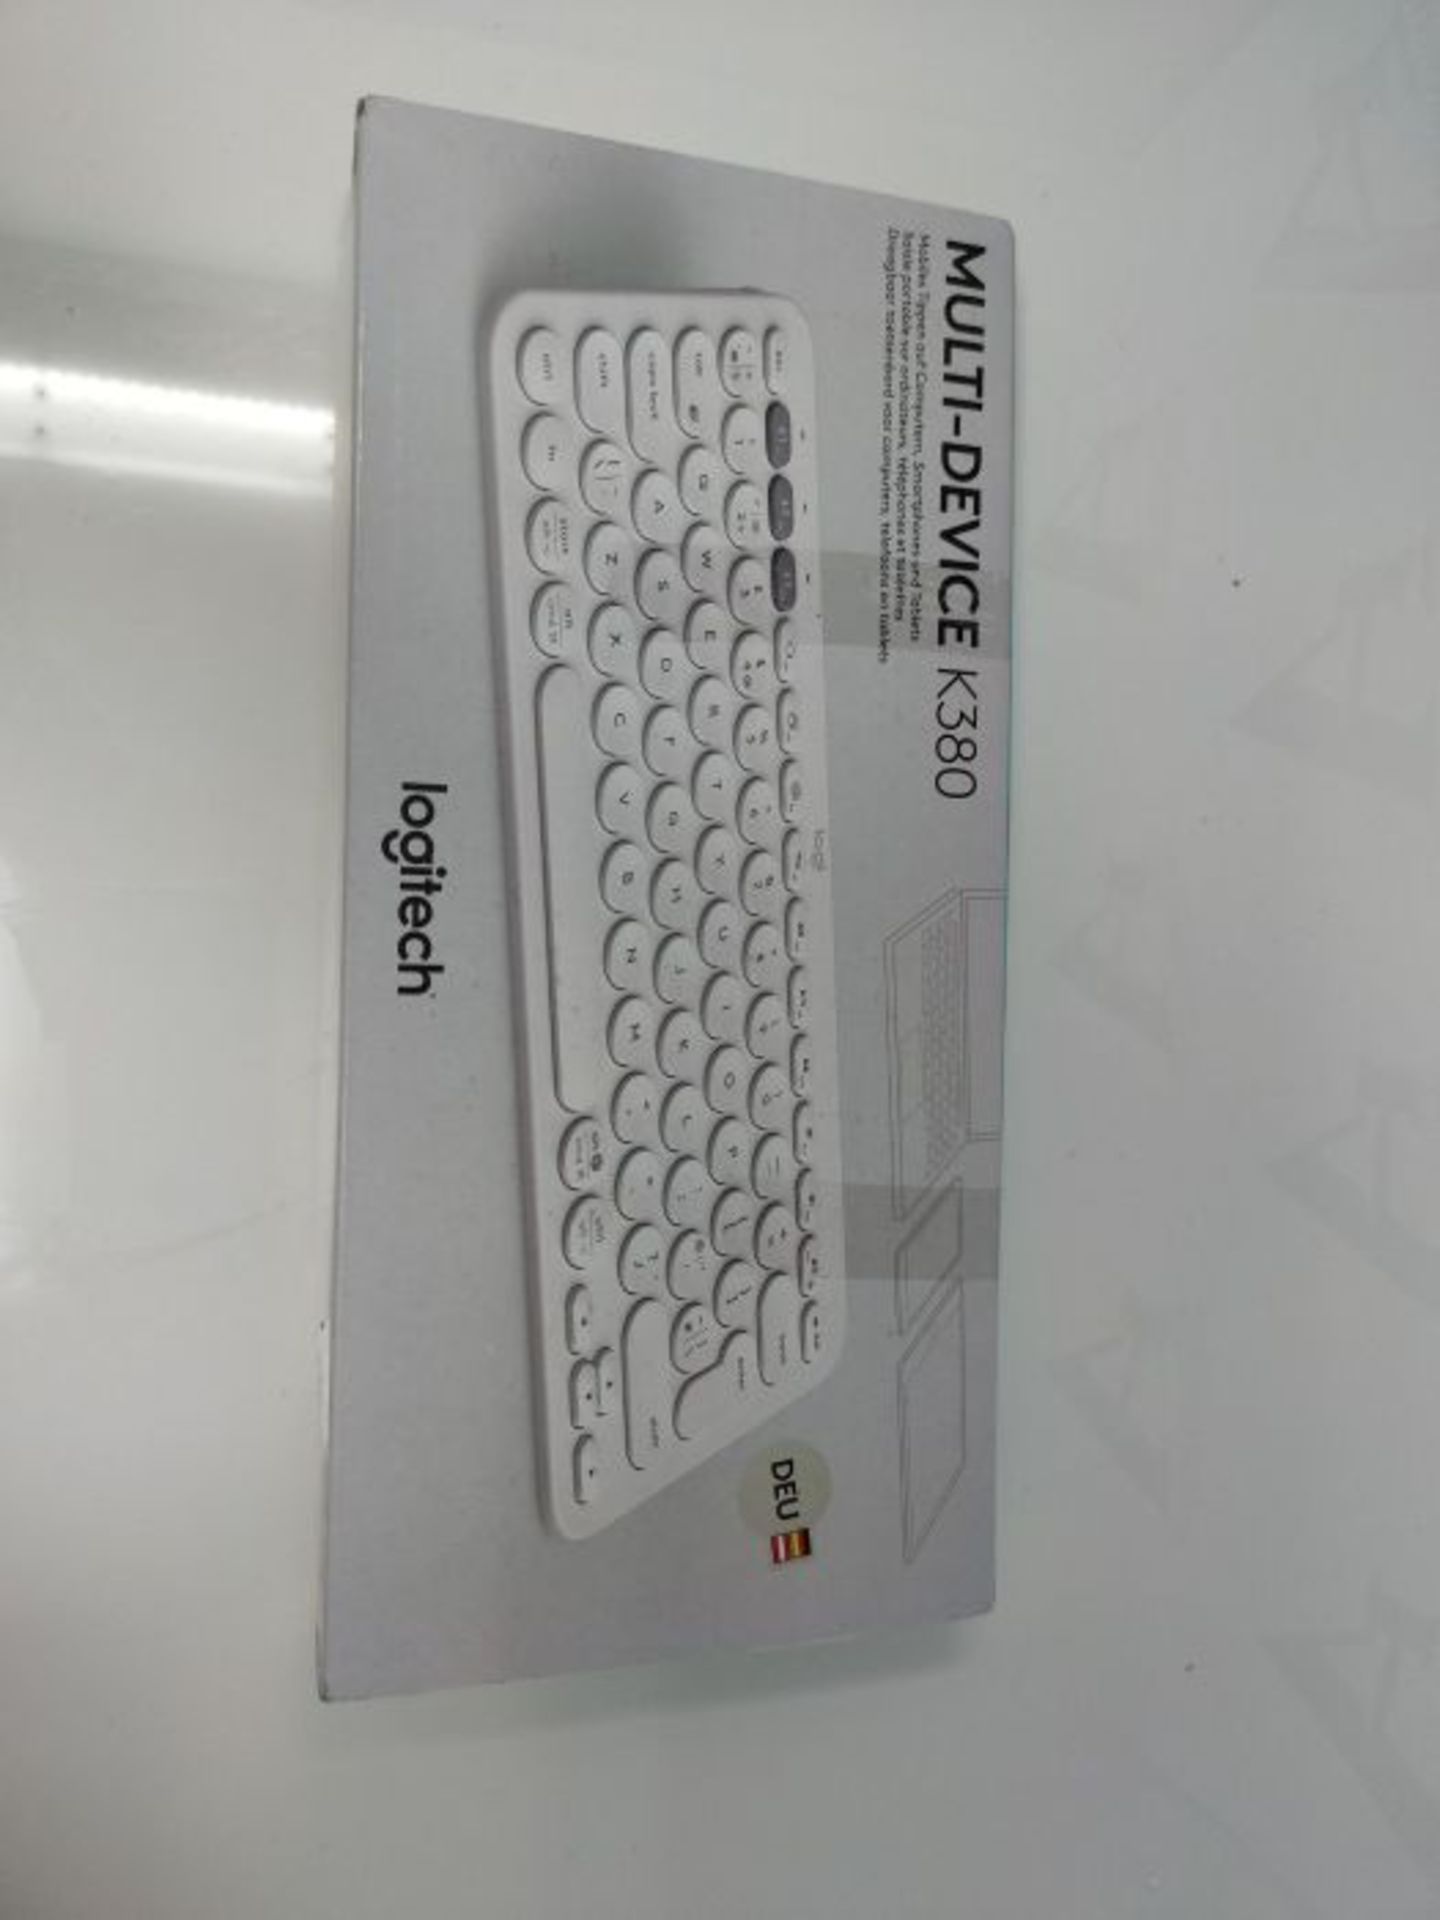 Logitech K380 Multi-Device Bluetooth Keyboard, QWERTZ German Layout - White - Image 2 of 3